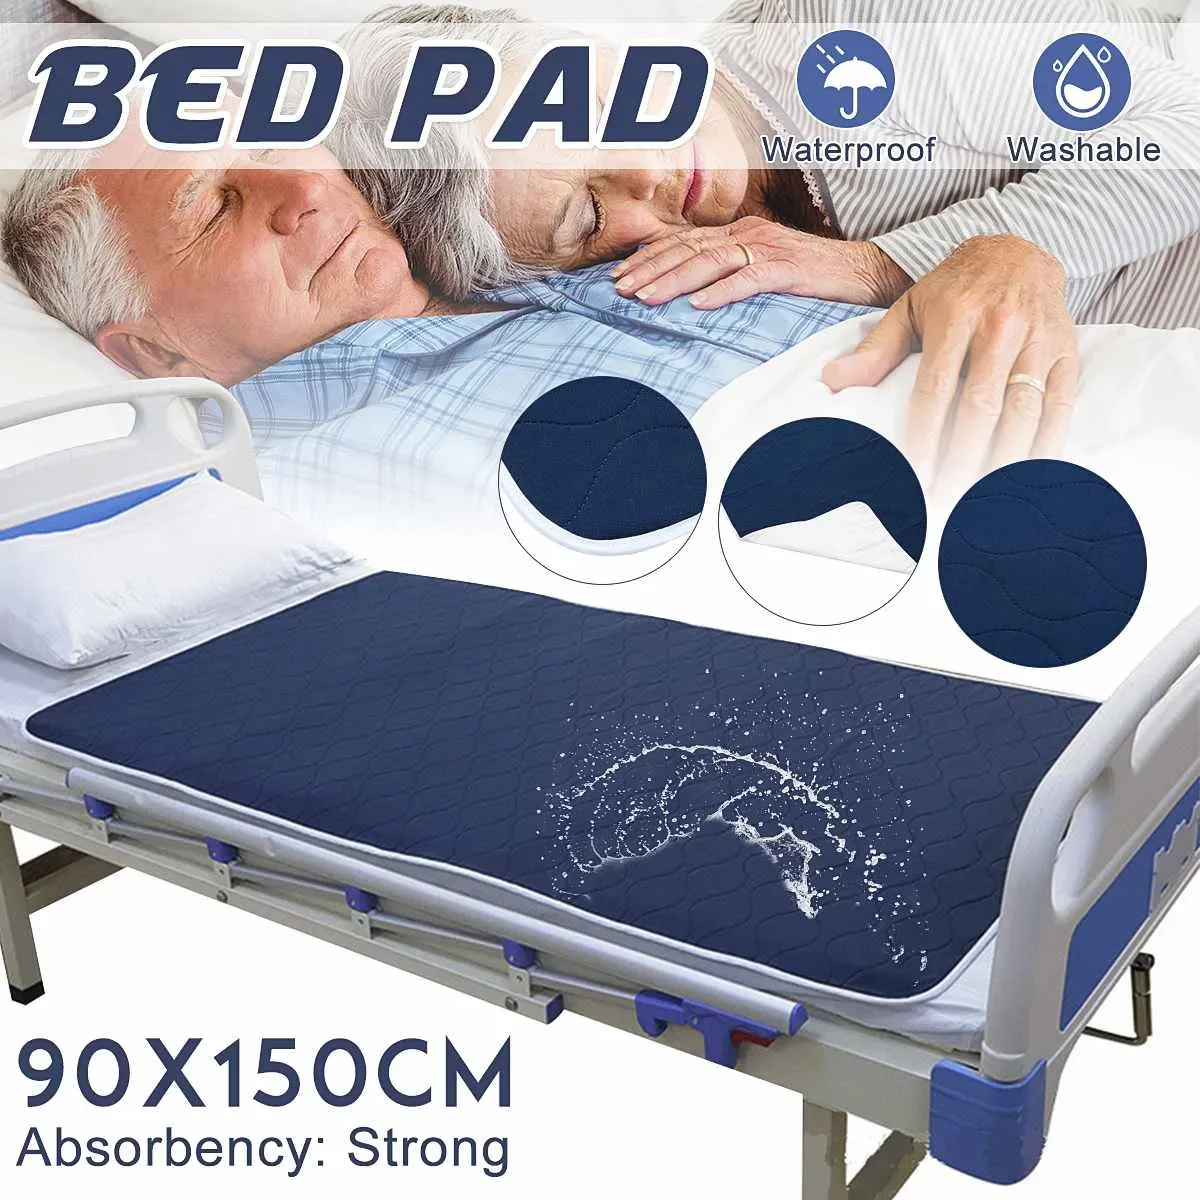 https://ae01.alicdn.com/kf/S1e1fe7b5a8b445c393817828682f3a66b/Waterproof-Bedspread-Pads-Reusable-Non-Slip-King-Size-Bed-Sheet-Covers-Kids-Elderly-Patients-Urine-Mat.jpg